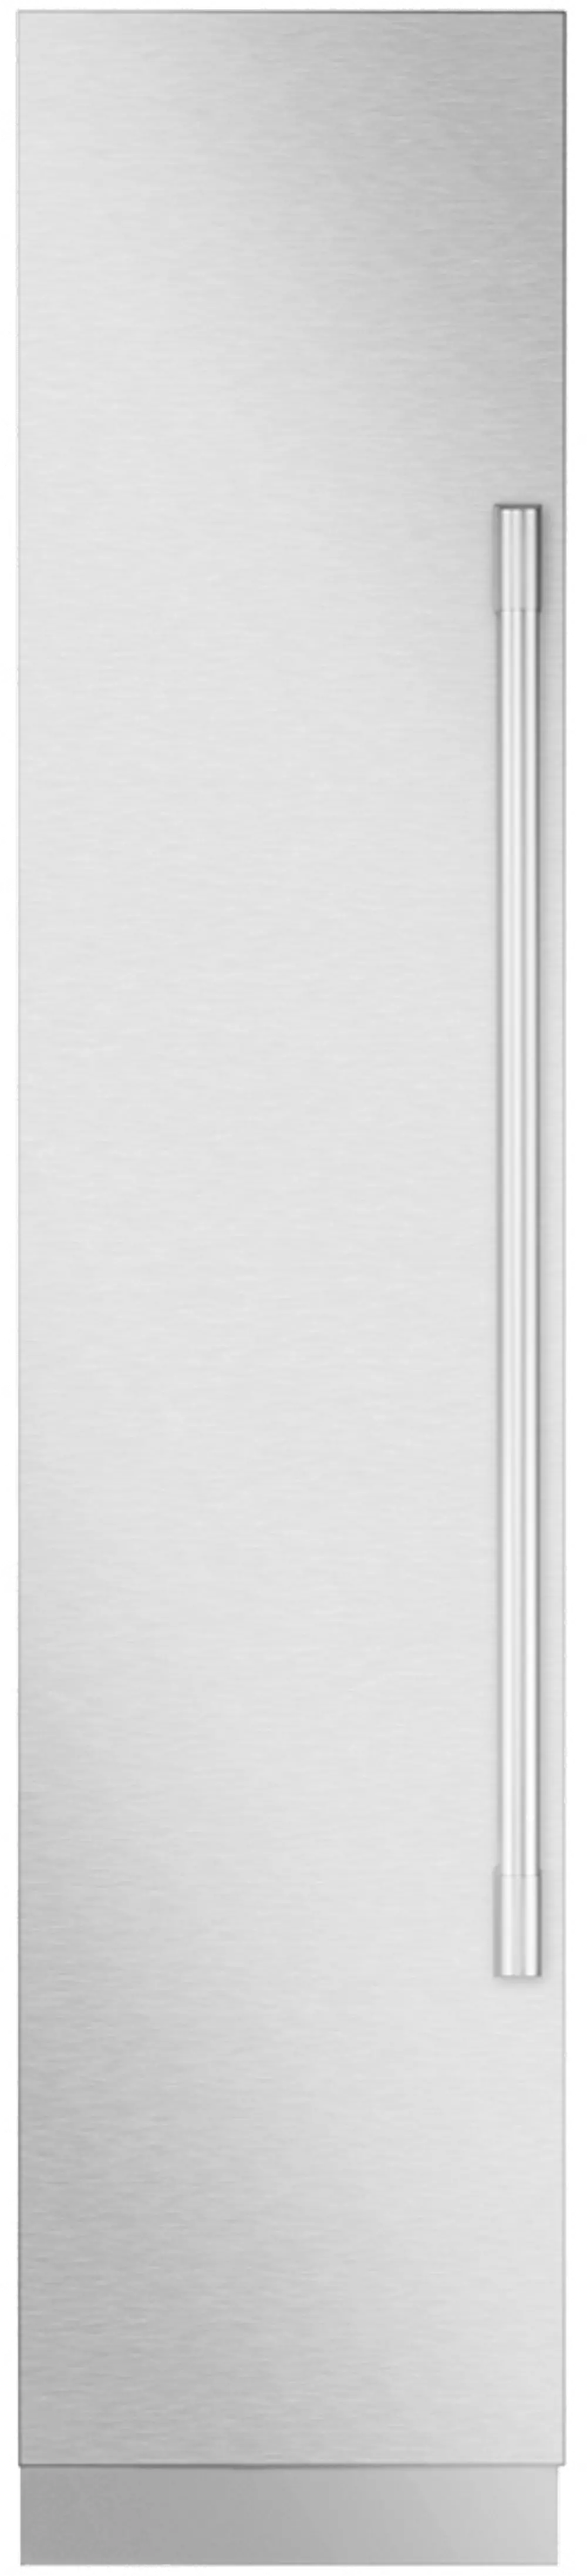 SKSCF1801P Signature 18 Inch Column Smart Freezer - Panel Ready-1